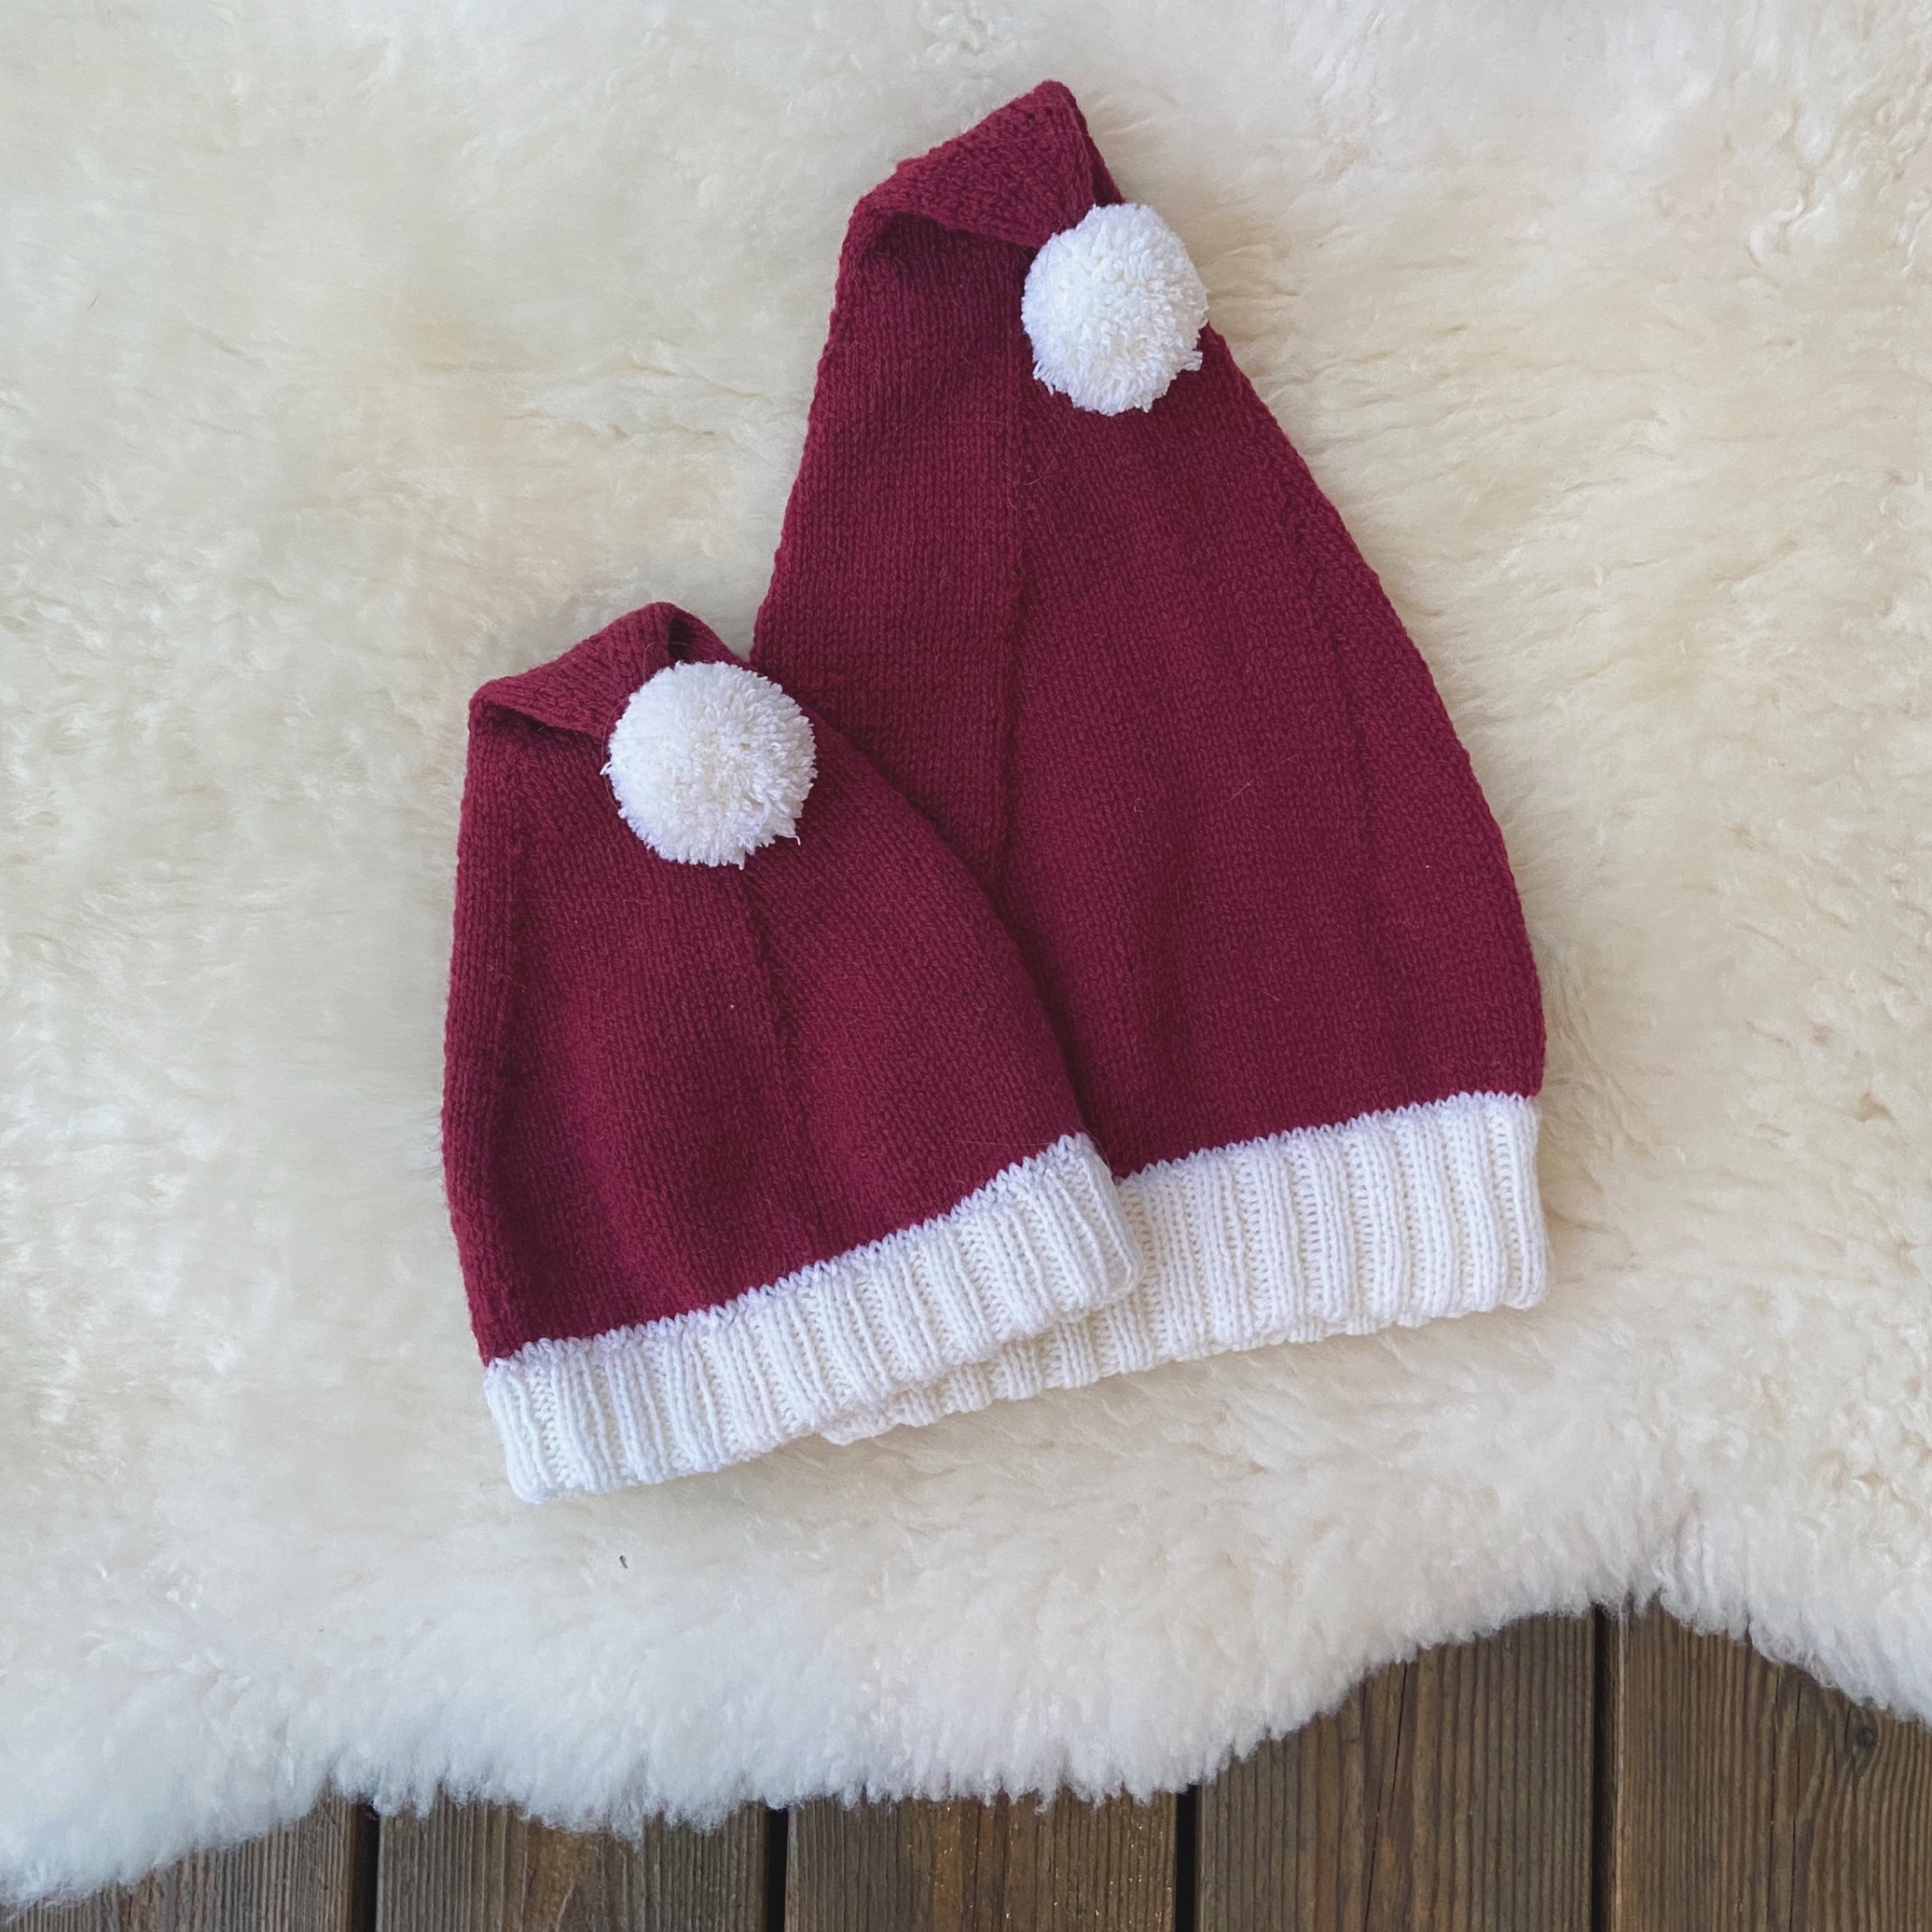 Santa hat knitting pattern for babies